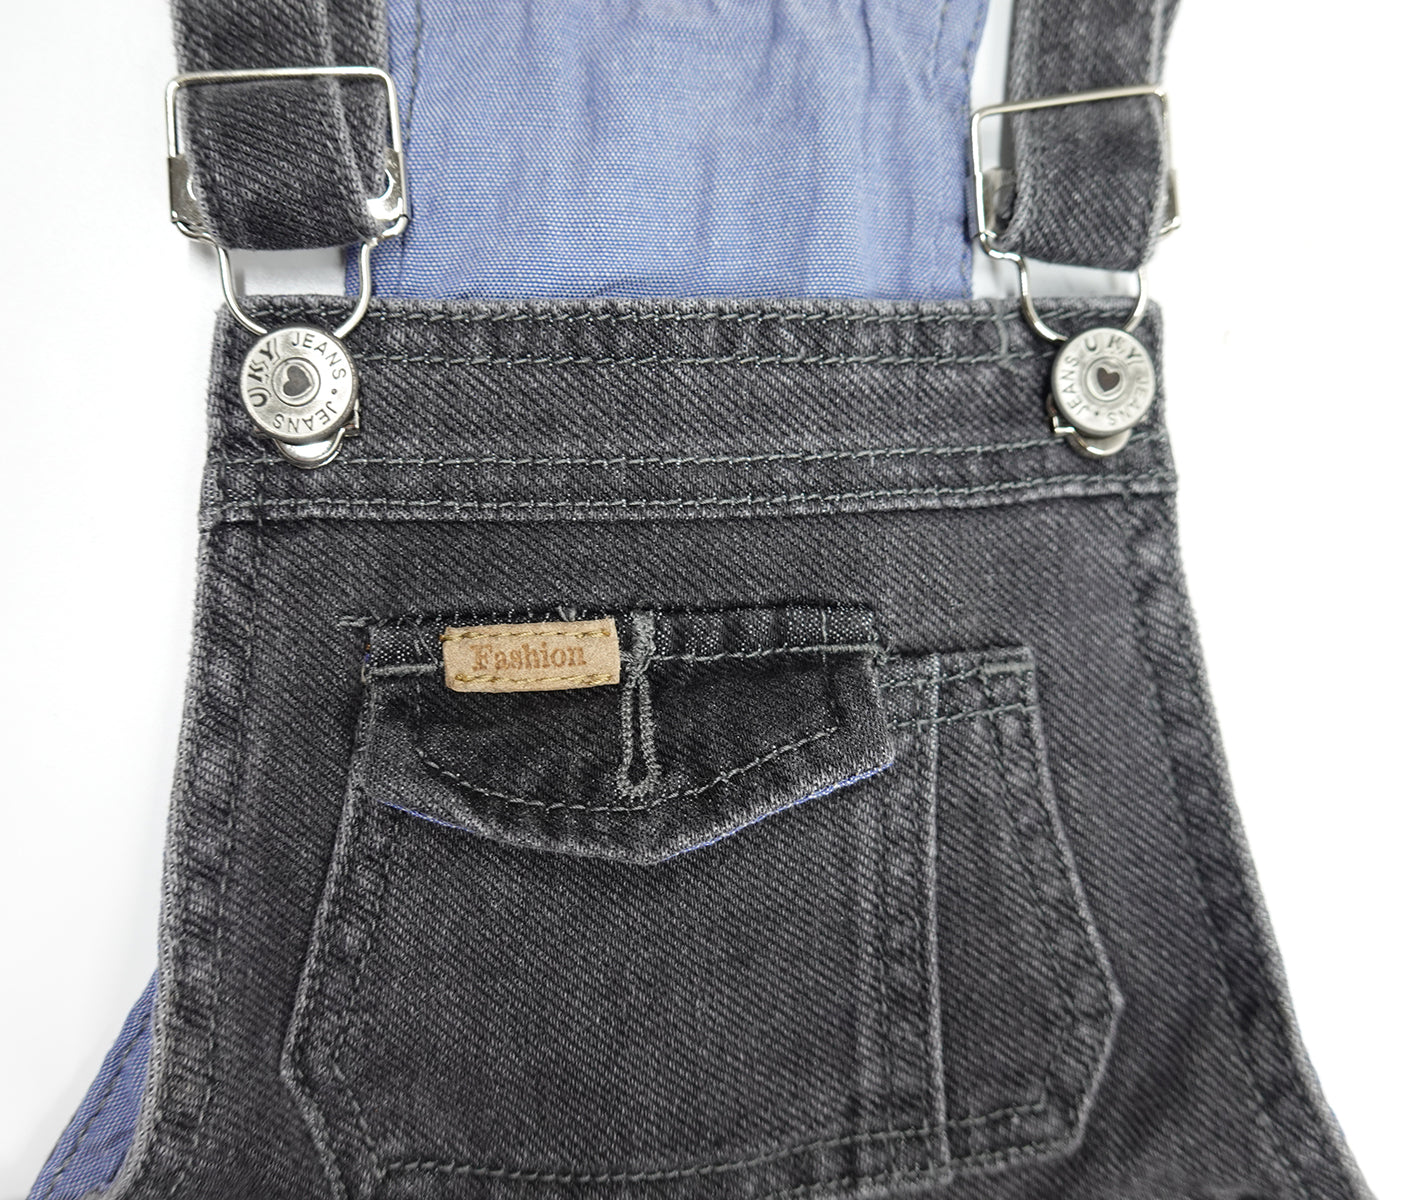 Novel Ripped Bib Pocket Fashion Denim Fit Jeans Overalls